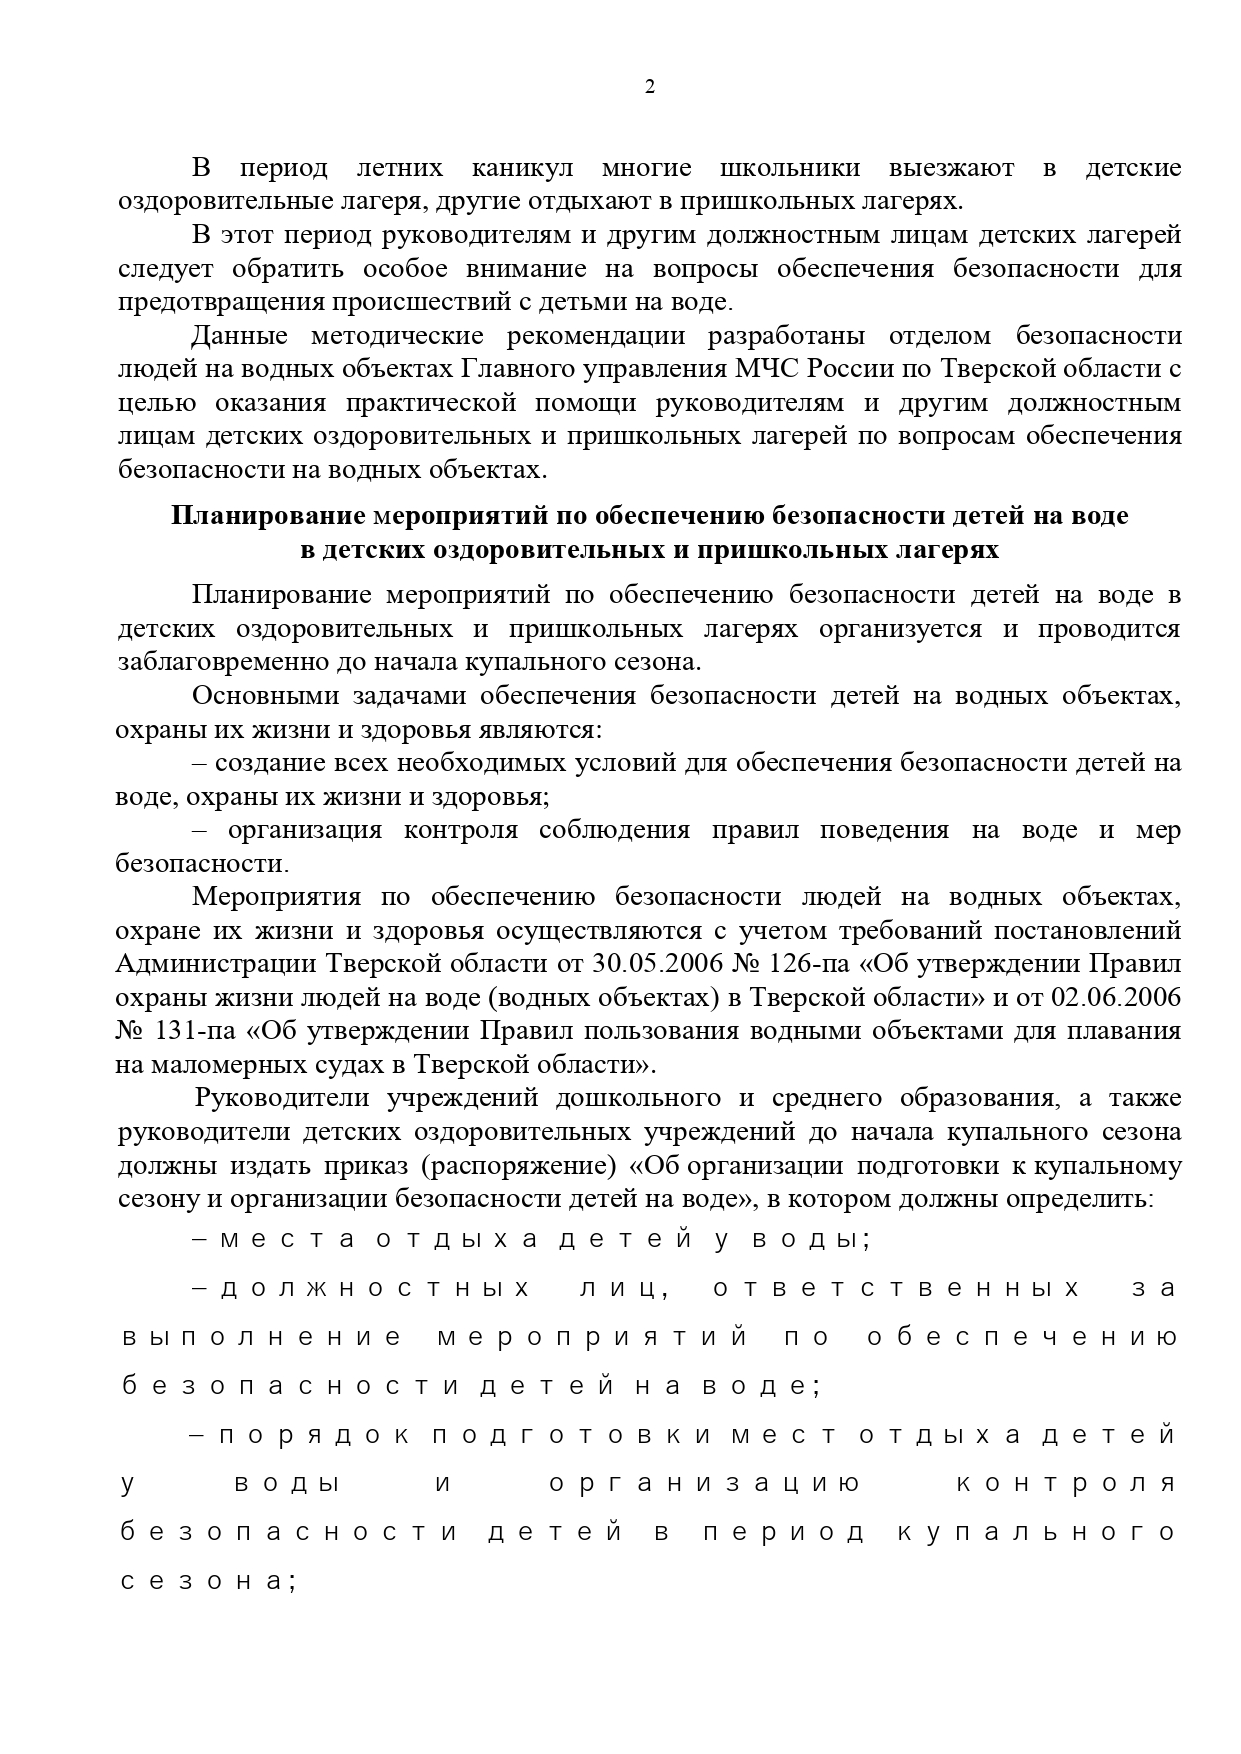 МР в ДОЛ page-0002